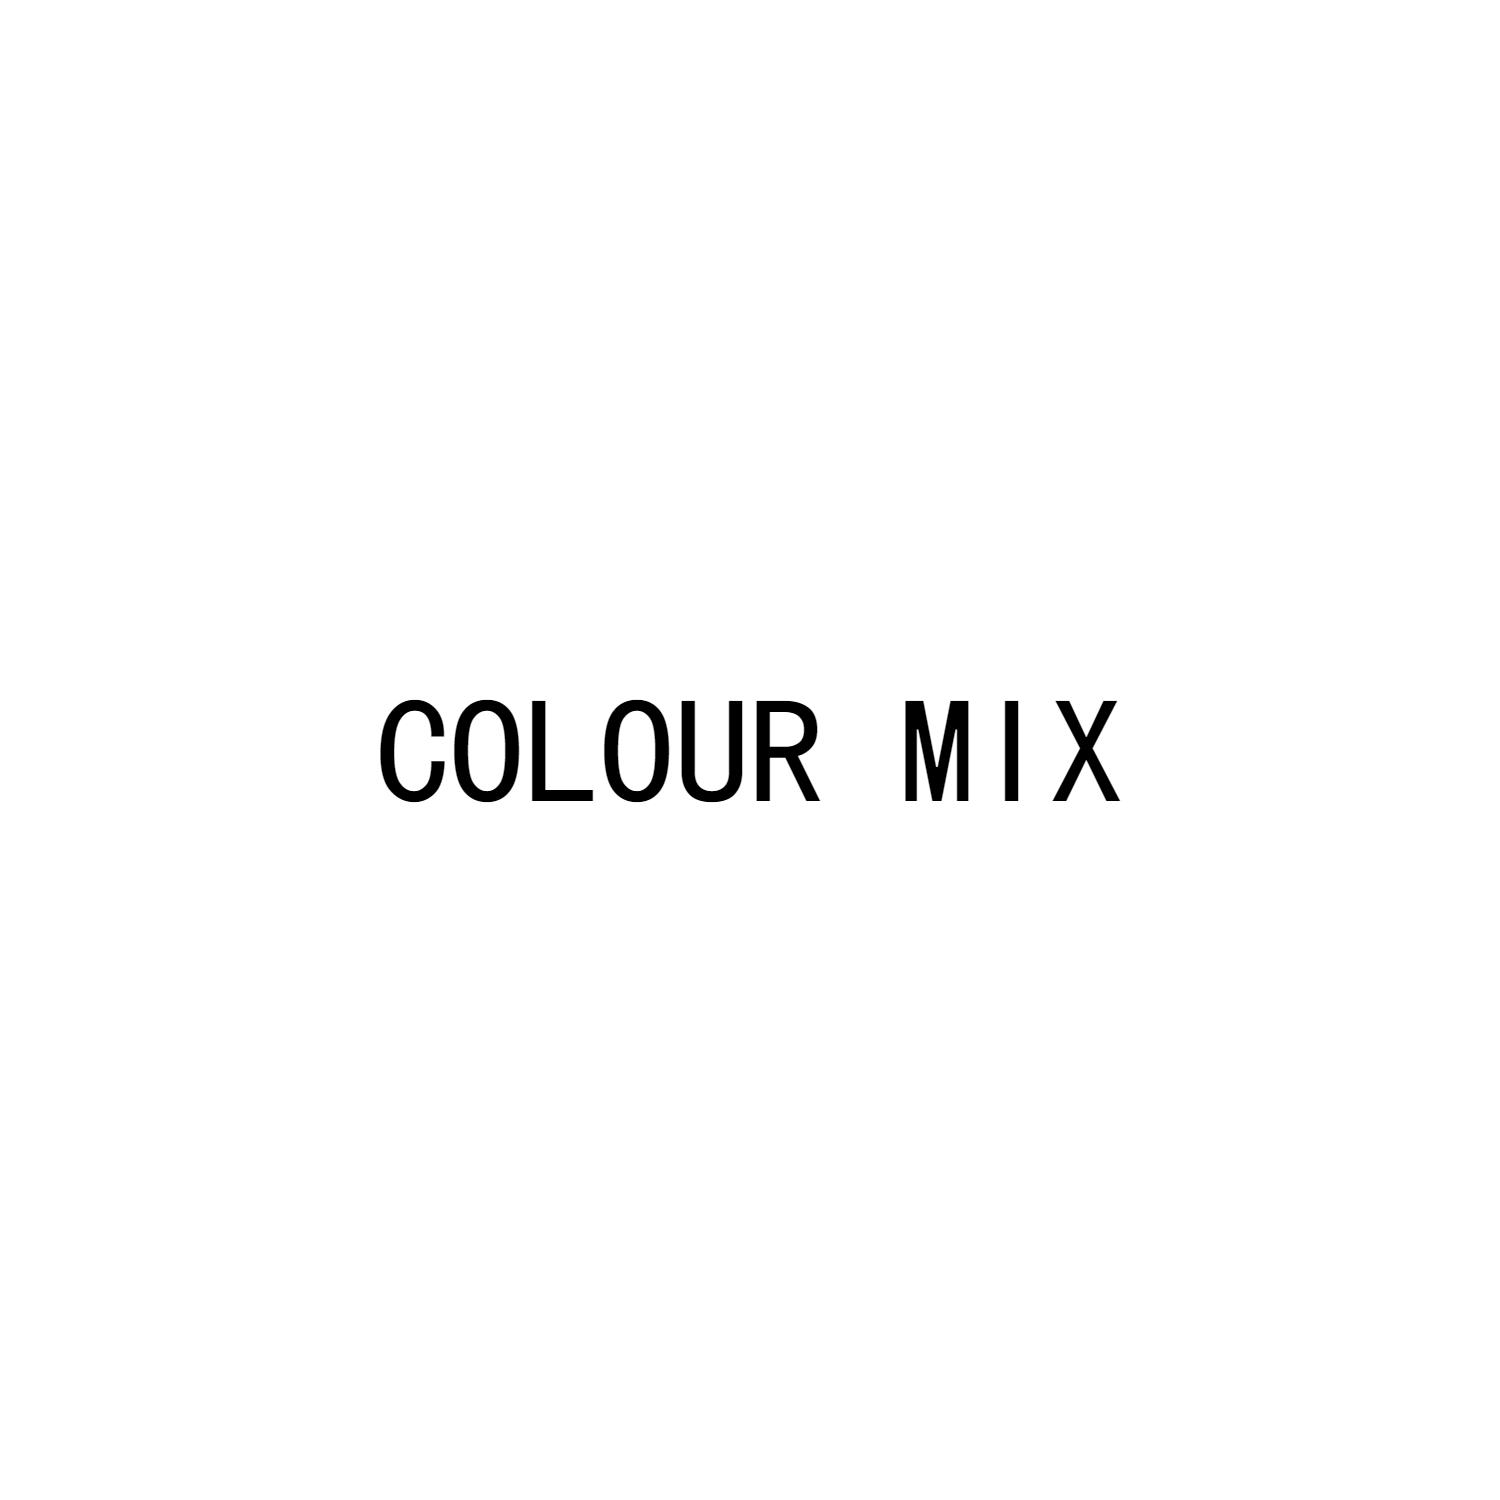 colour mix 商标公告